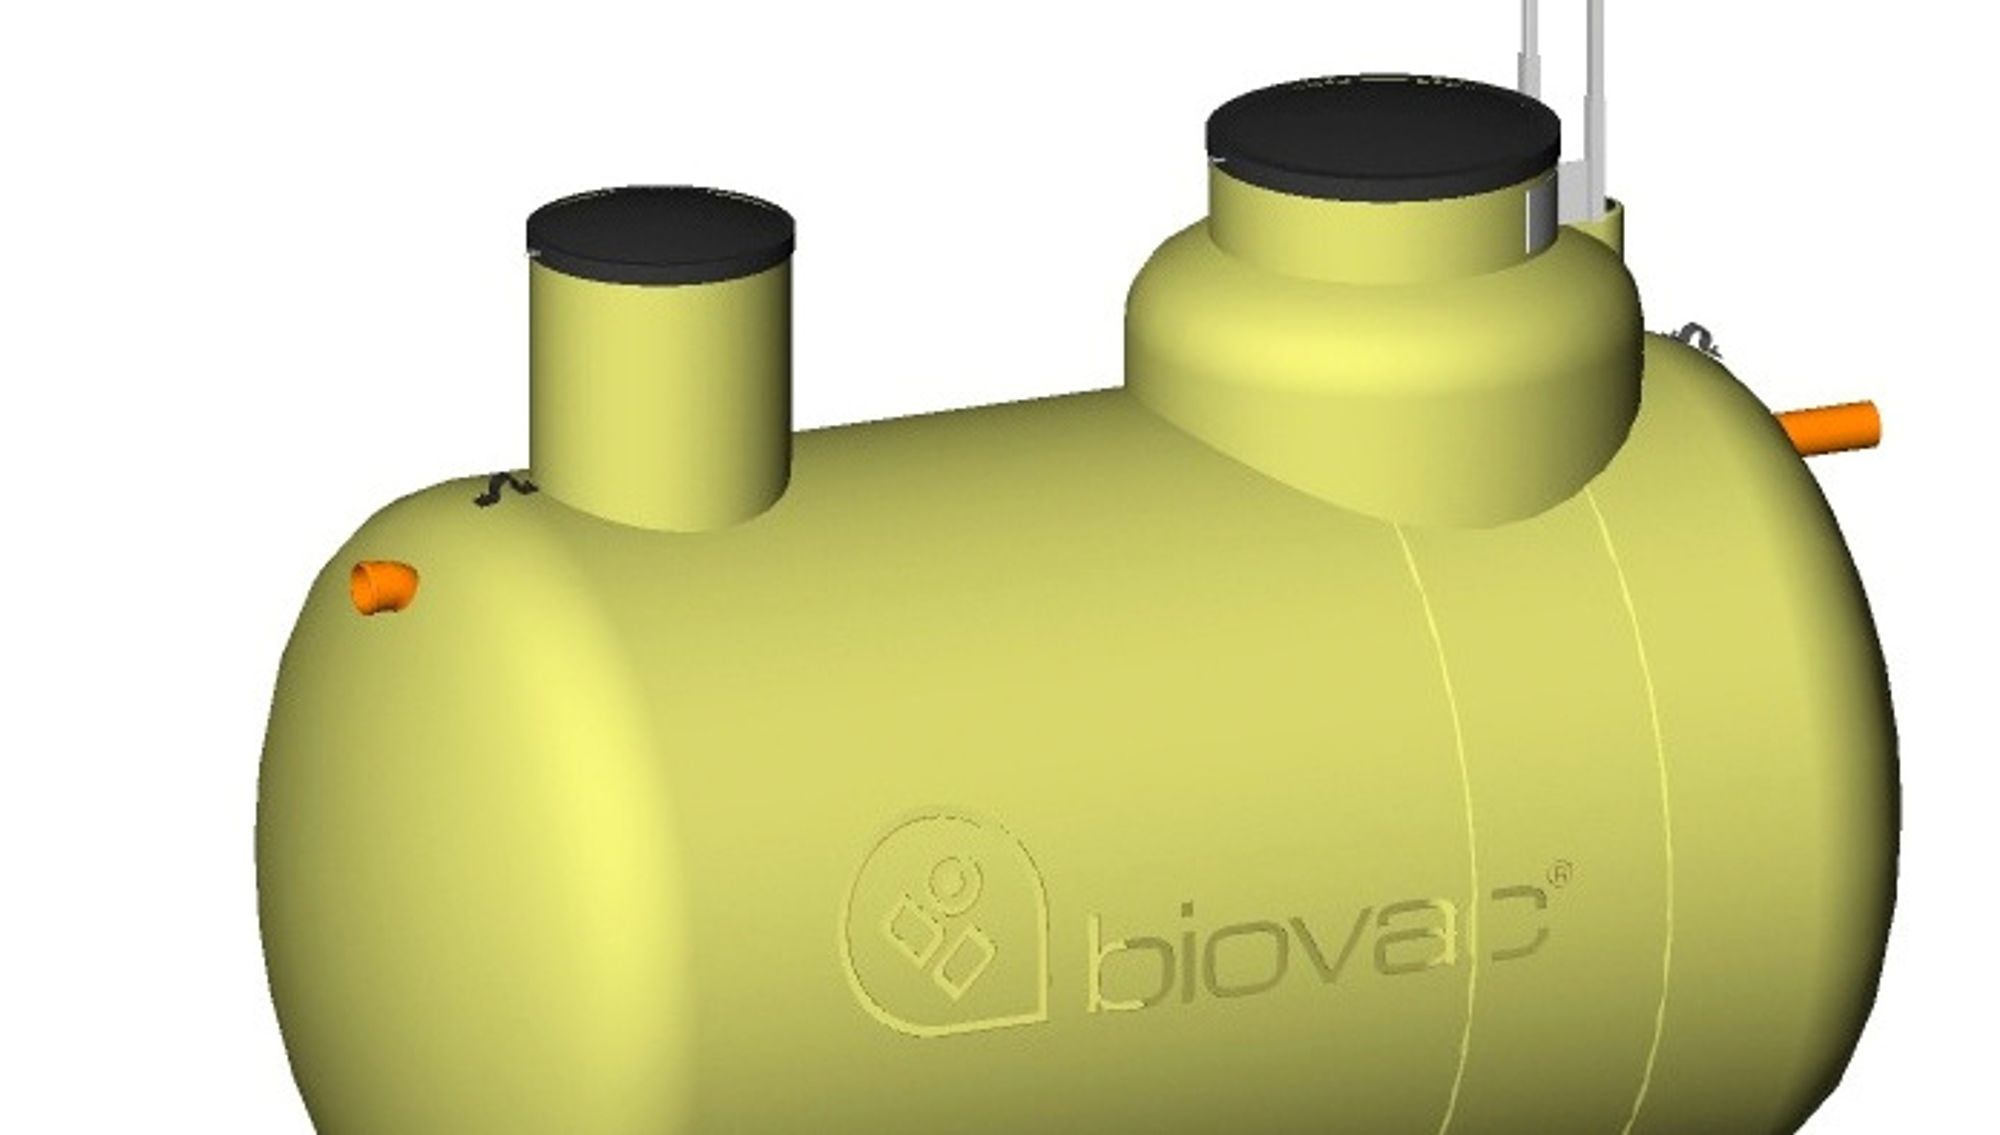 Biovac renseanlegg